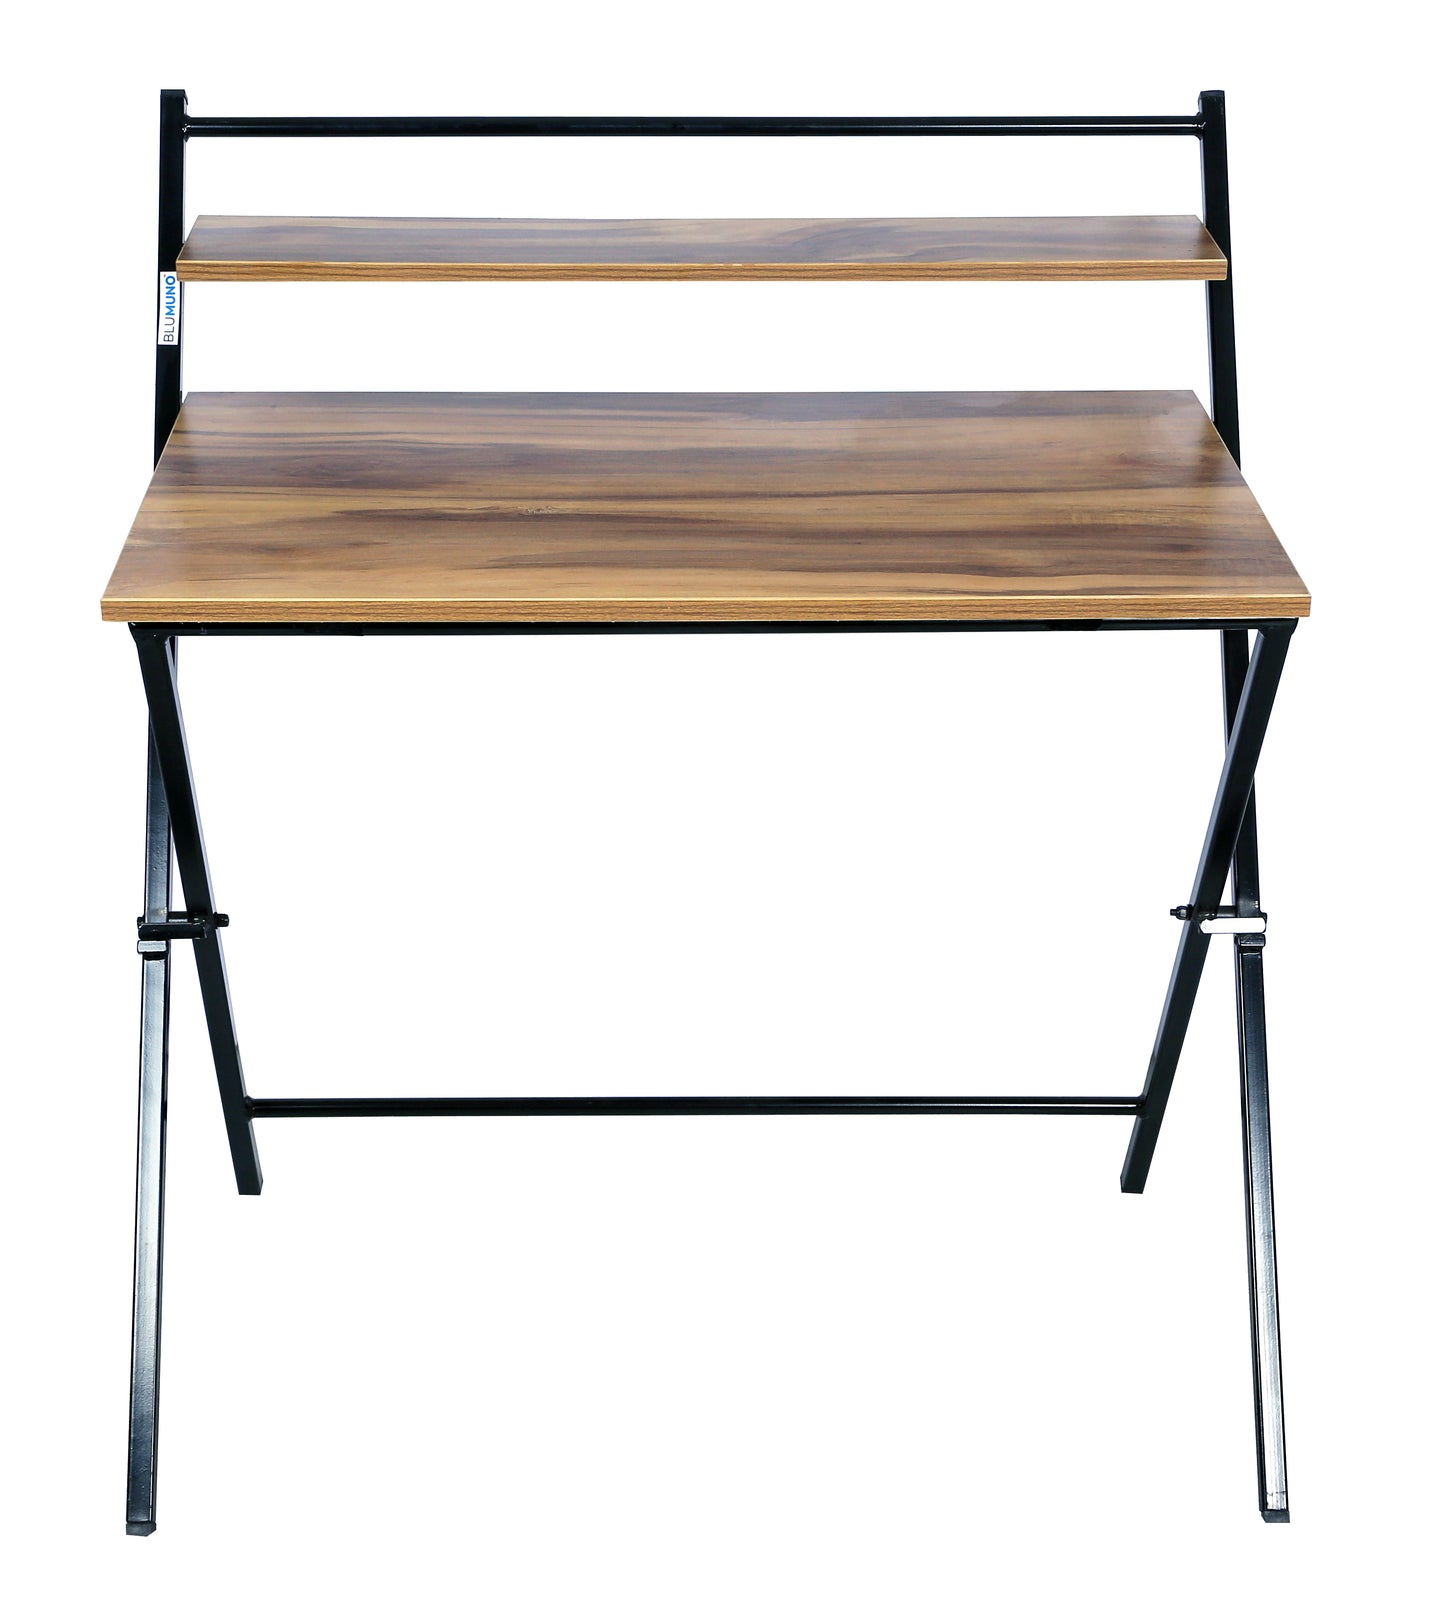 Blumuno X-Plus Folding Table (Natural Wooden Finish)